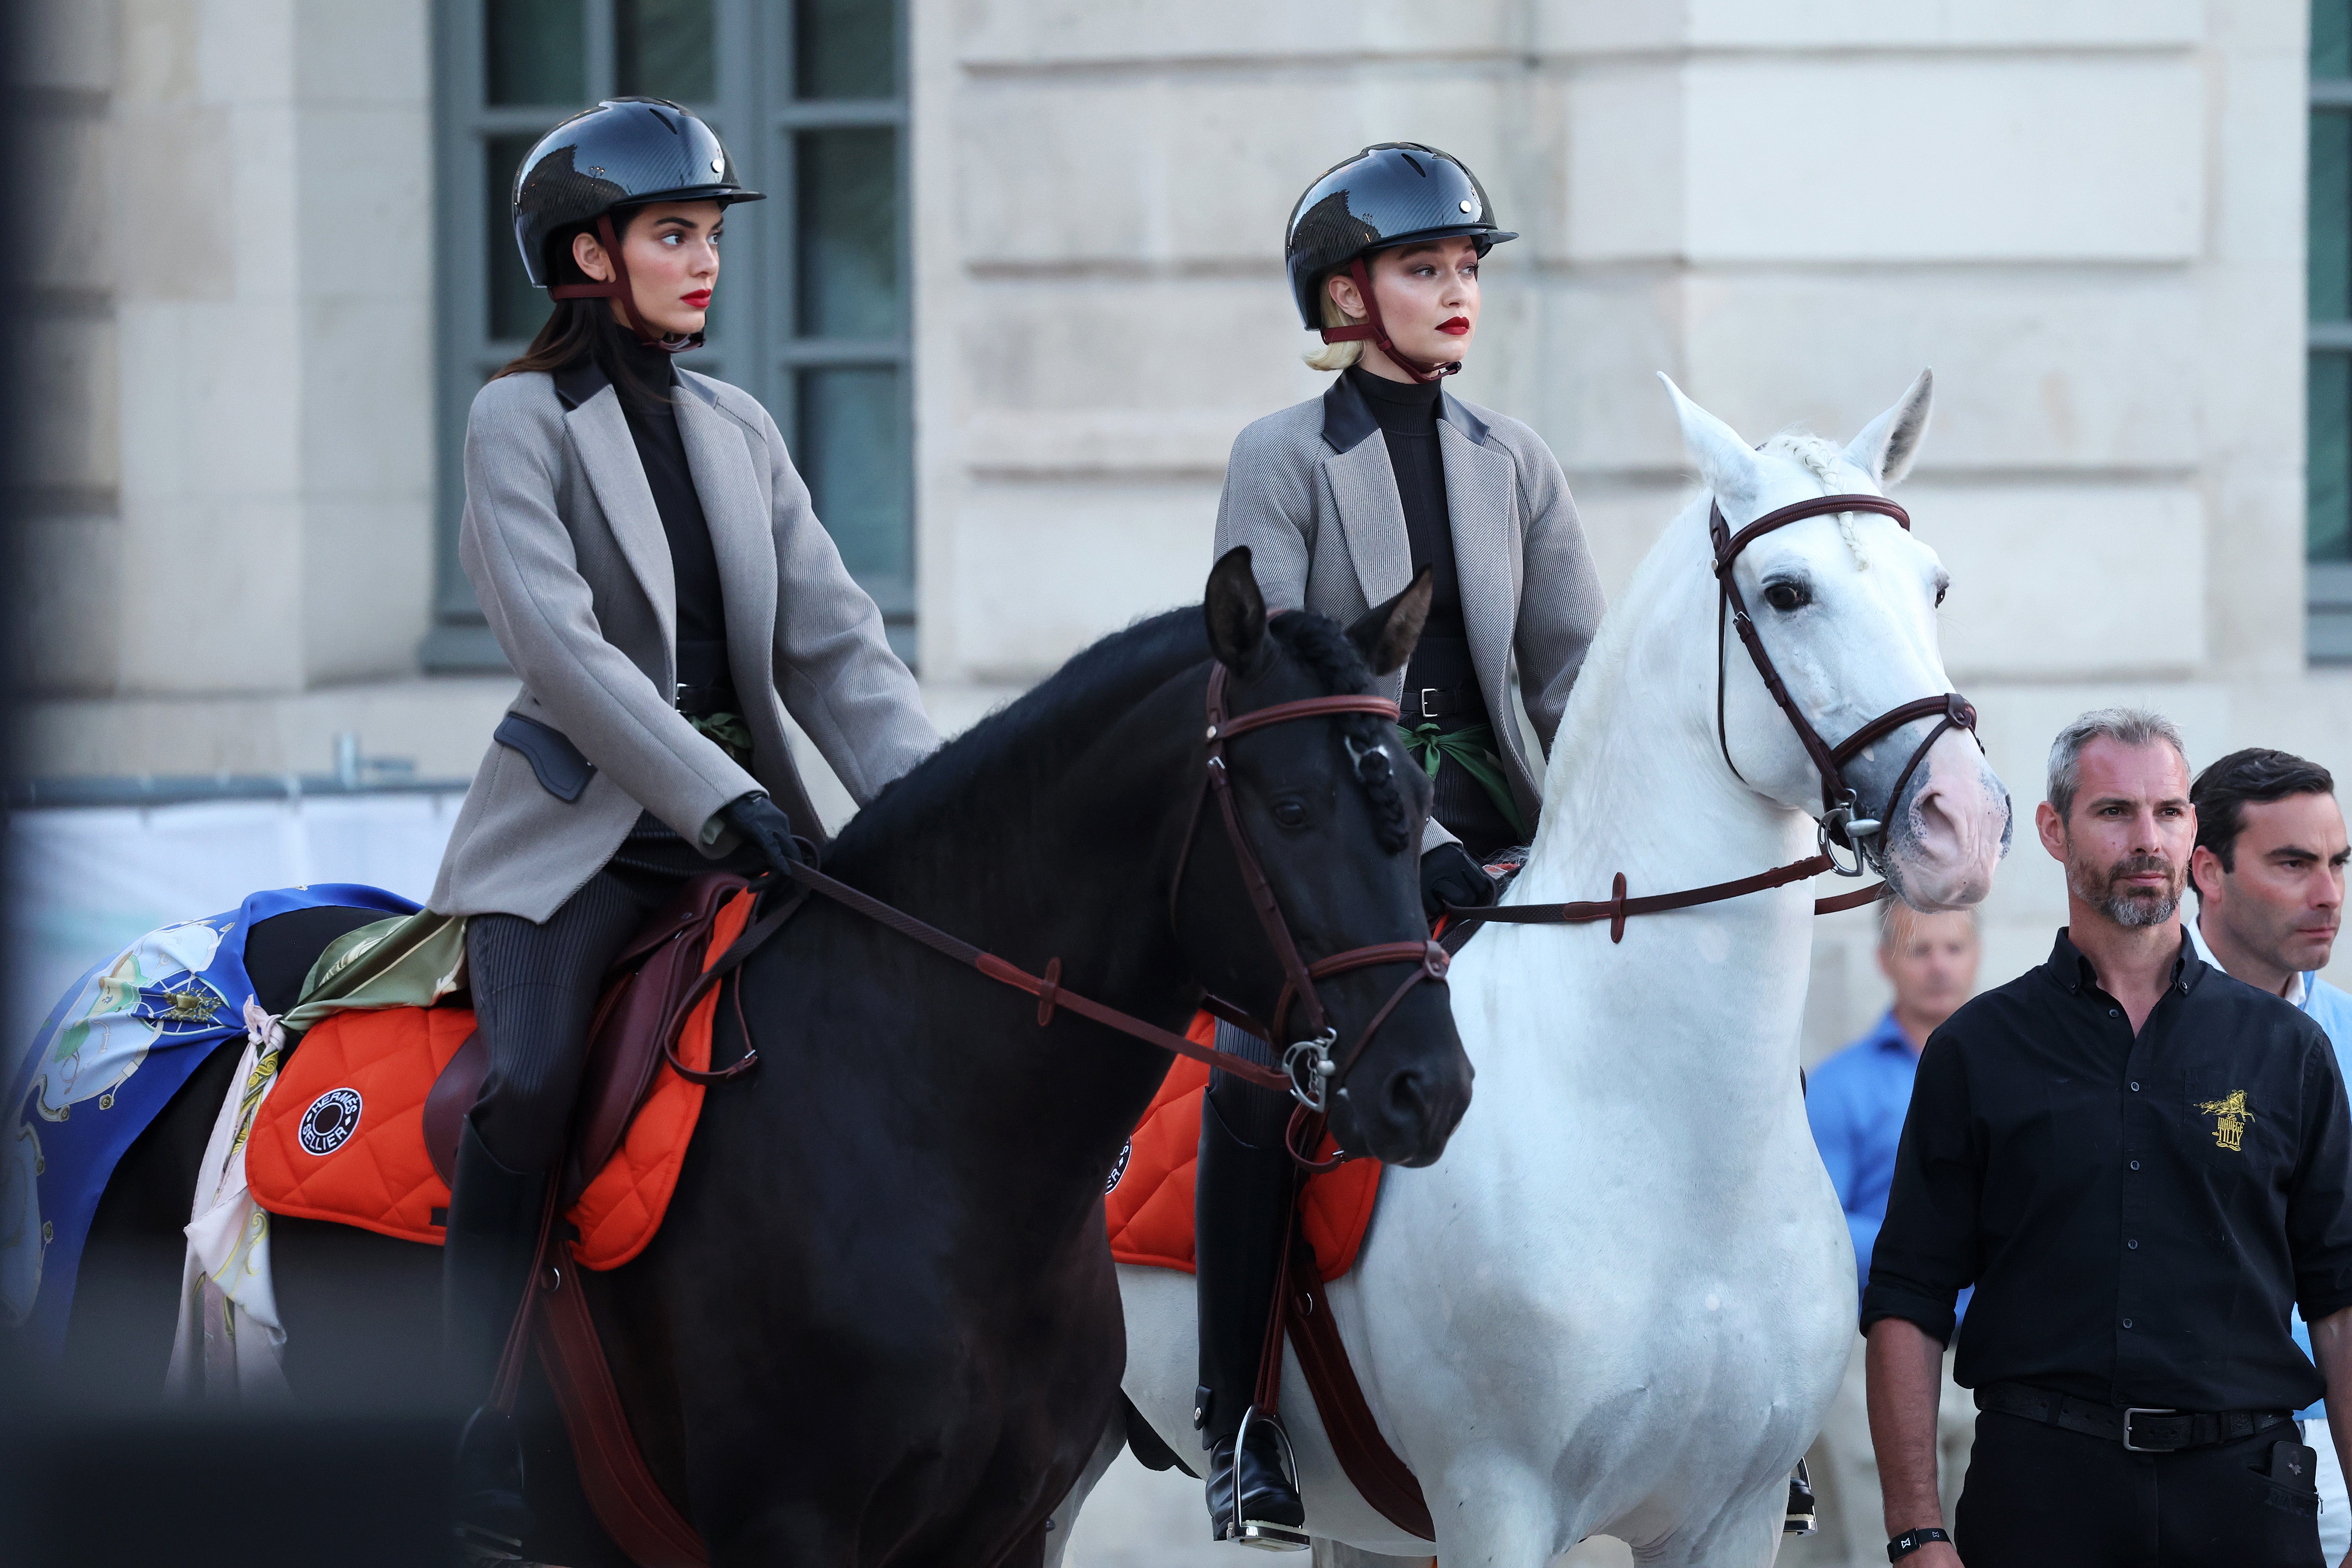 Kendall Jenner and Gigi Hadid ride horses on the runway at Vogue World: Paris